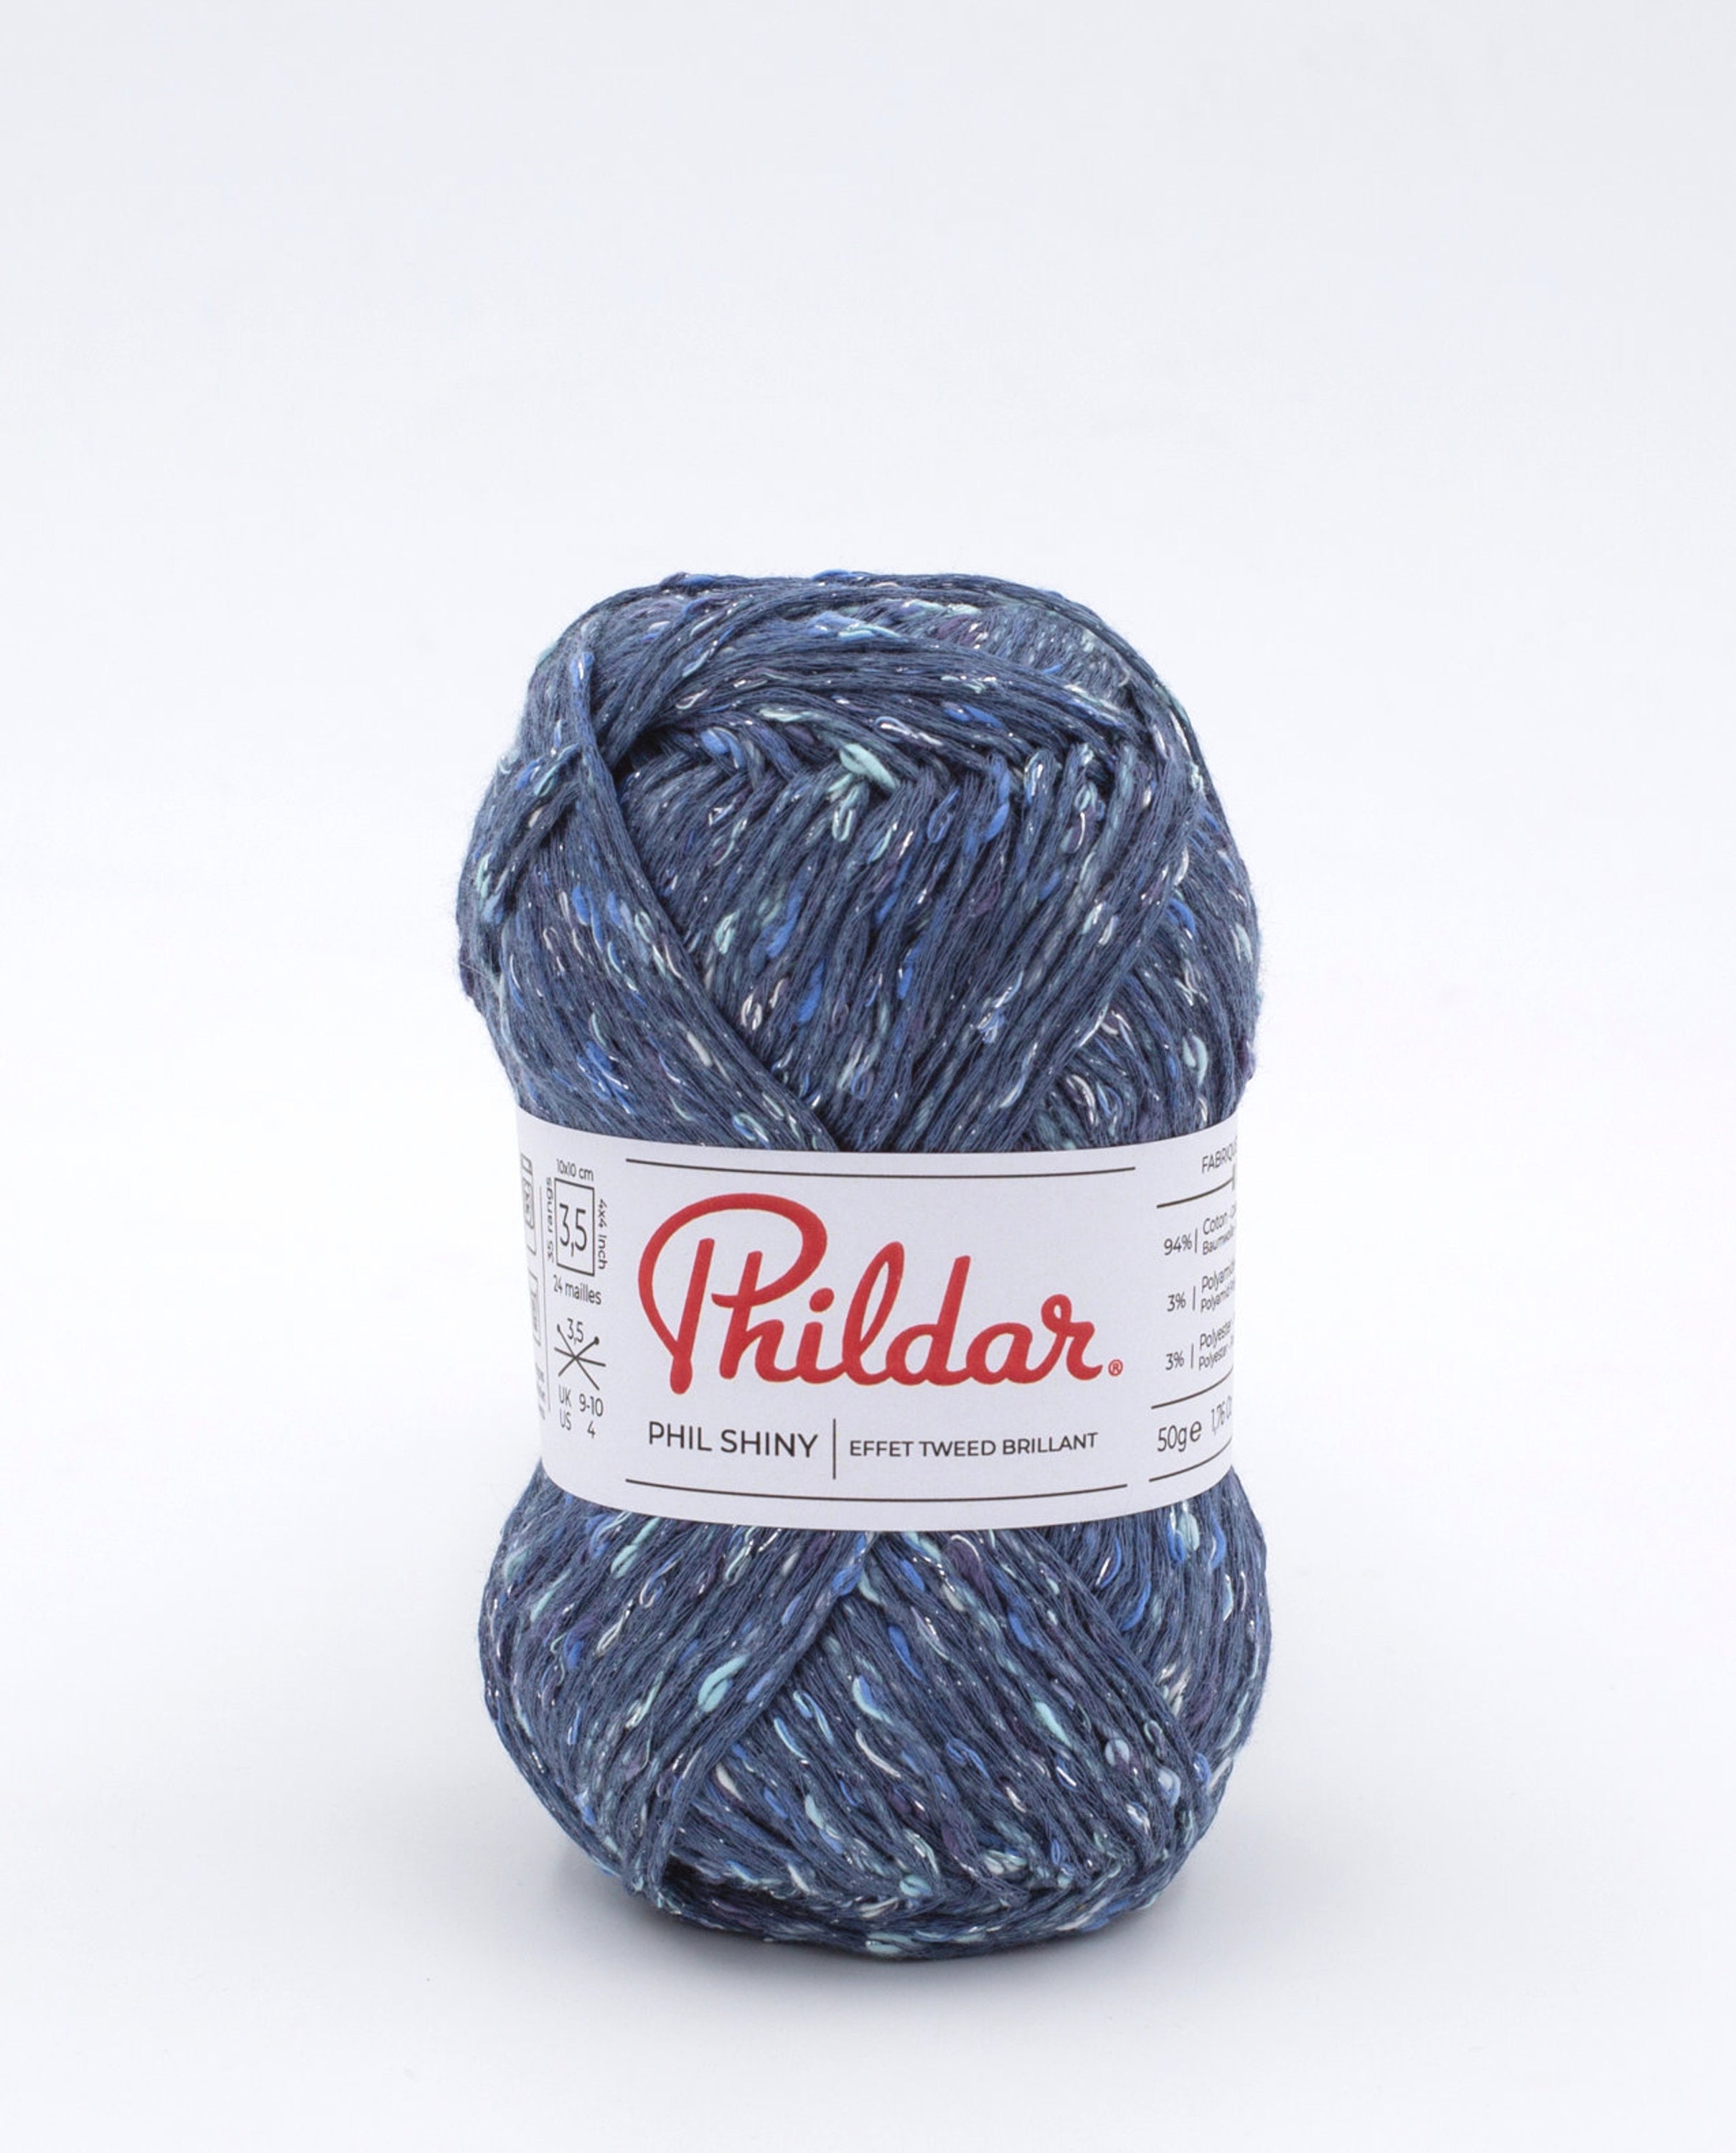 Cotton Blend Yarn Phildar RUSTIQUE Cotton, Linen and Viscose Yarn DK Weight  Yarn Summer Crochet and Knitting Yarn DK Yarn -  Israel